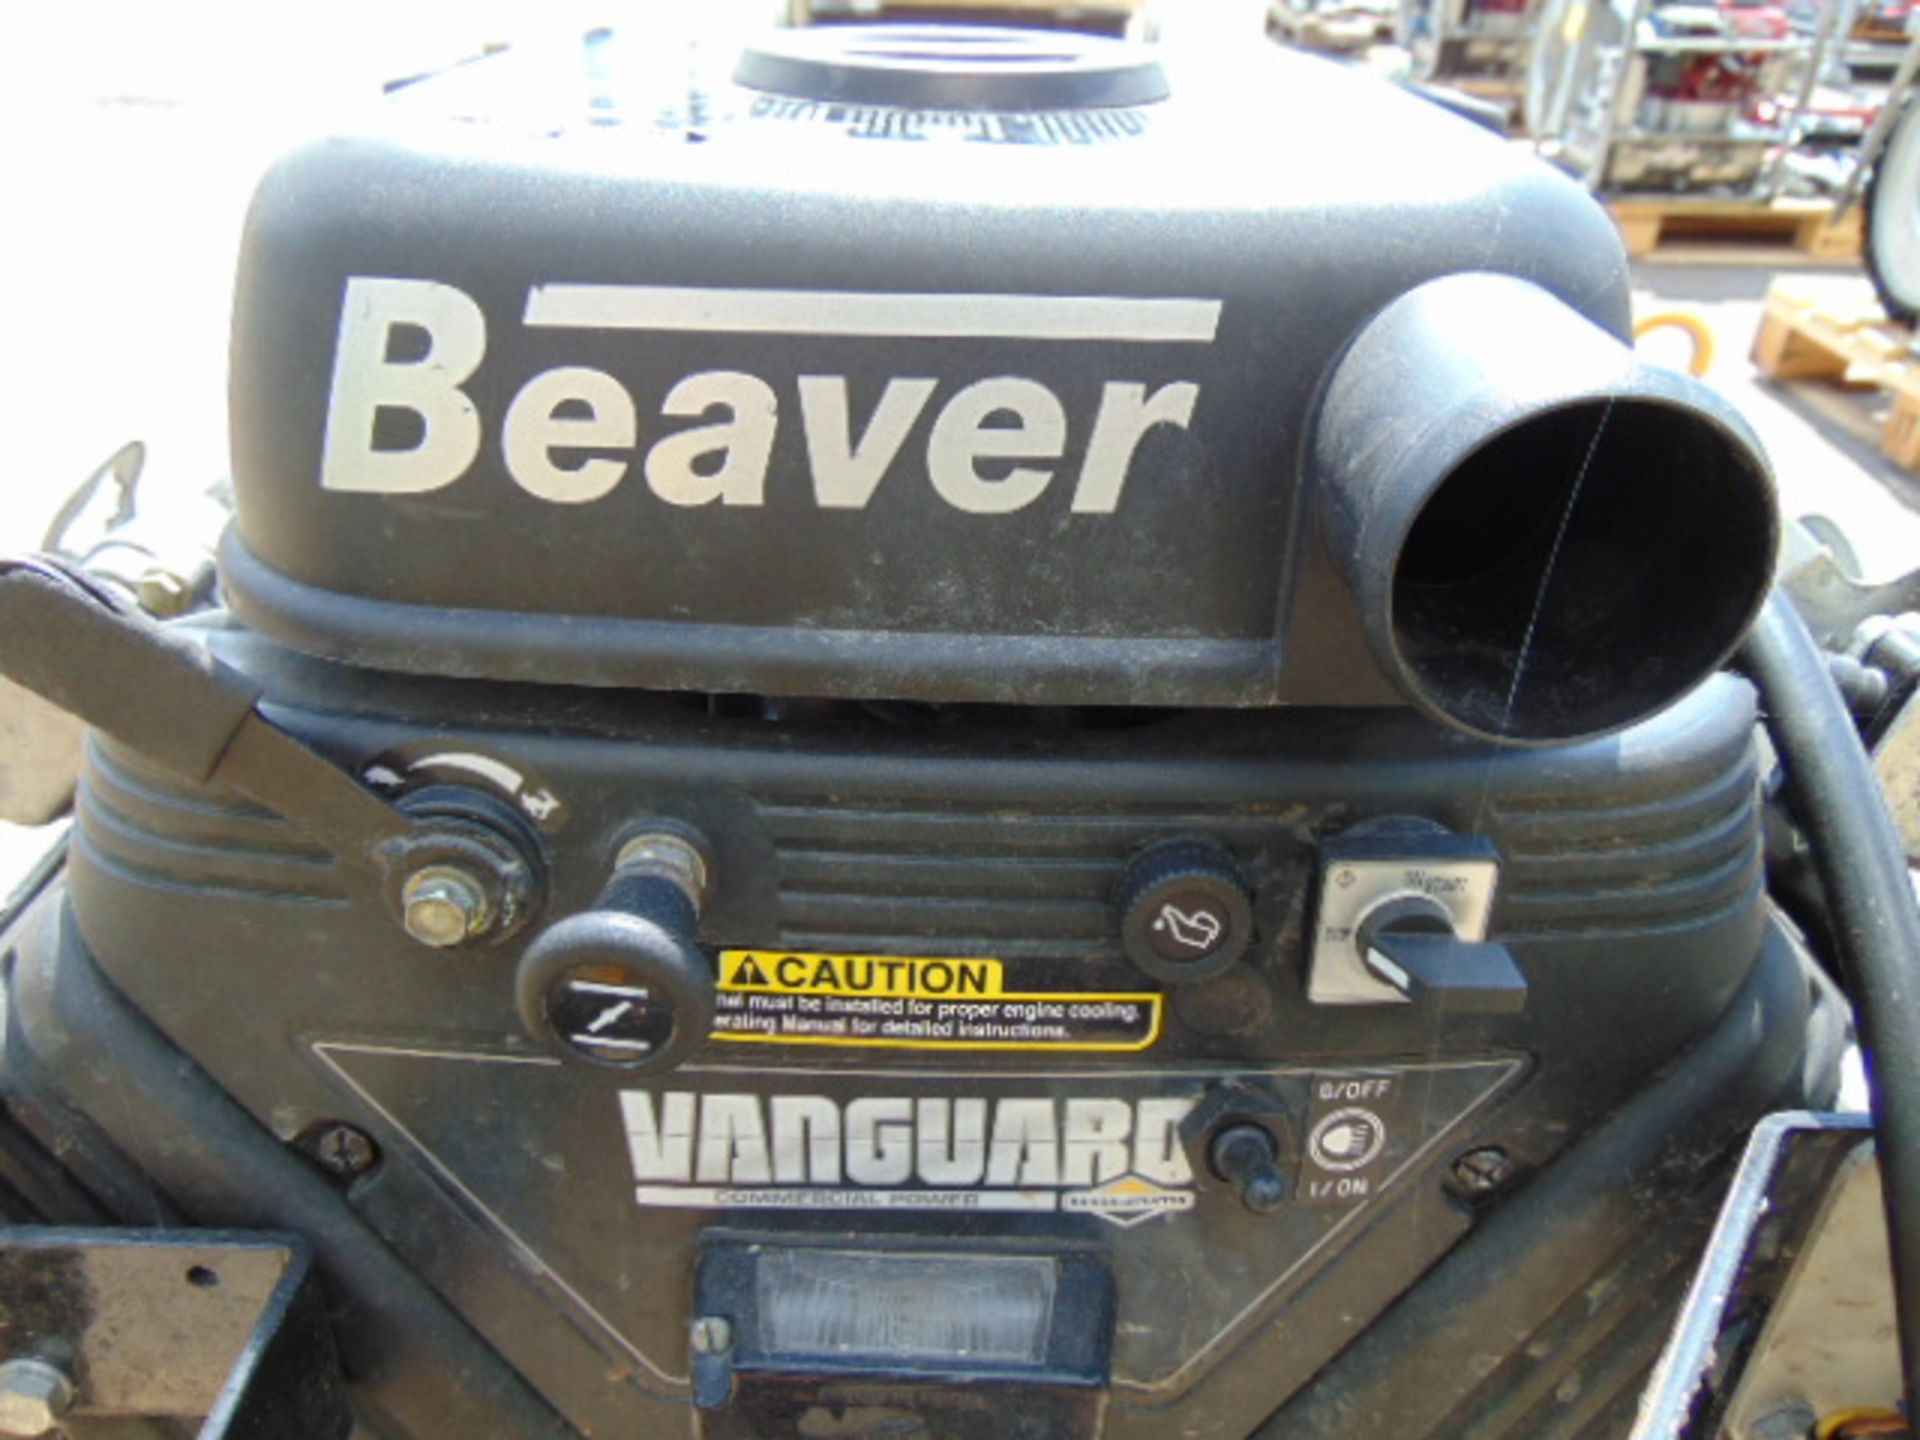 Rosenbauer Beaver Portable Fire Fighting Water Pump - Image 6 of 8